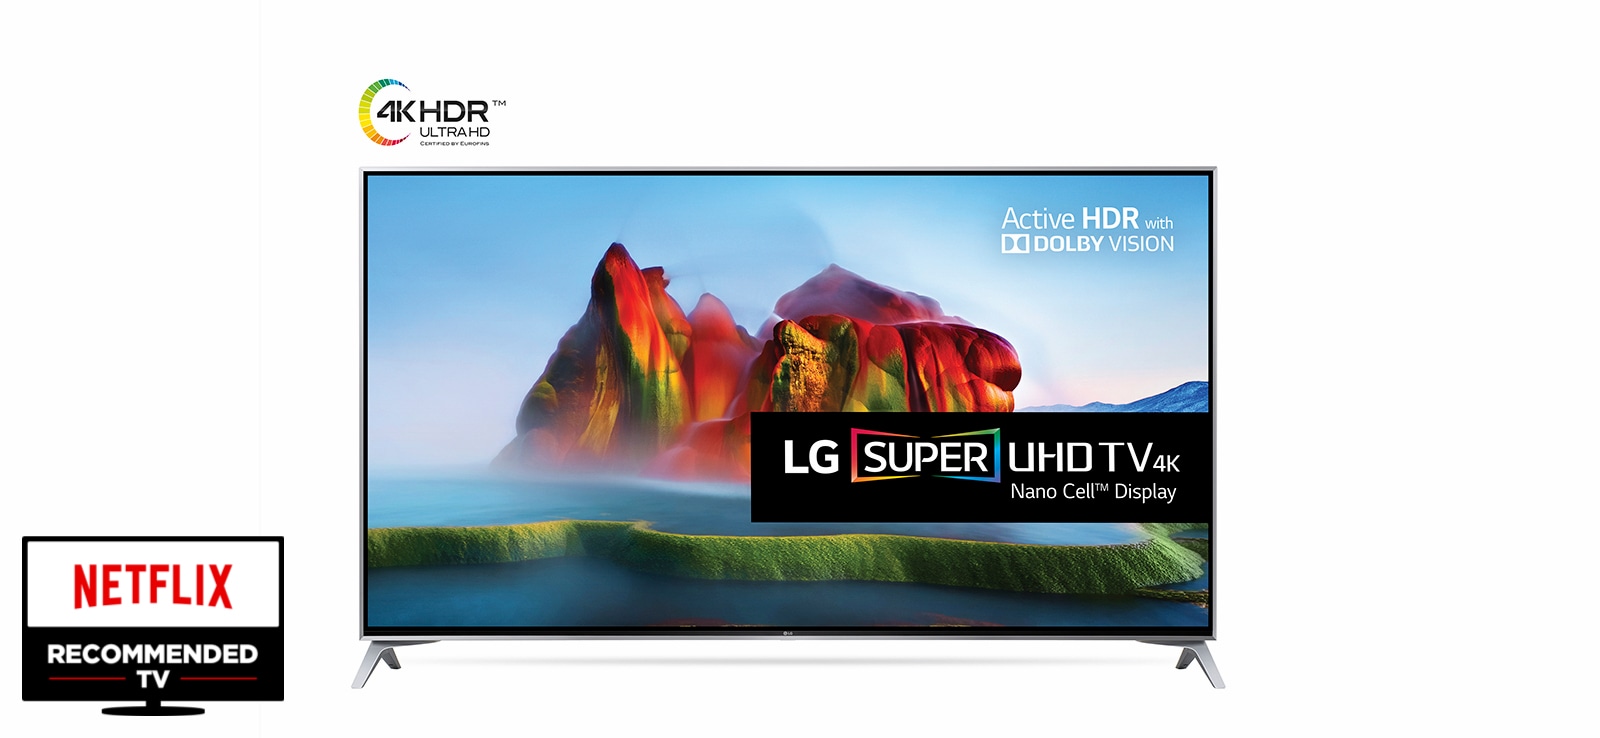 LG 55'' (139 cm) SUPER Ultra HD televizor s IPS 4K Nano Cell™ Display zaslonom, Active HDR - Dolby Vision tehnologijom, webOS 3.5 i harman/kardon®audio sustavom, 55SJ800V